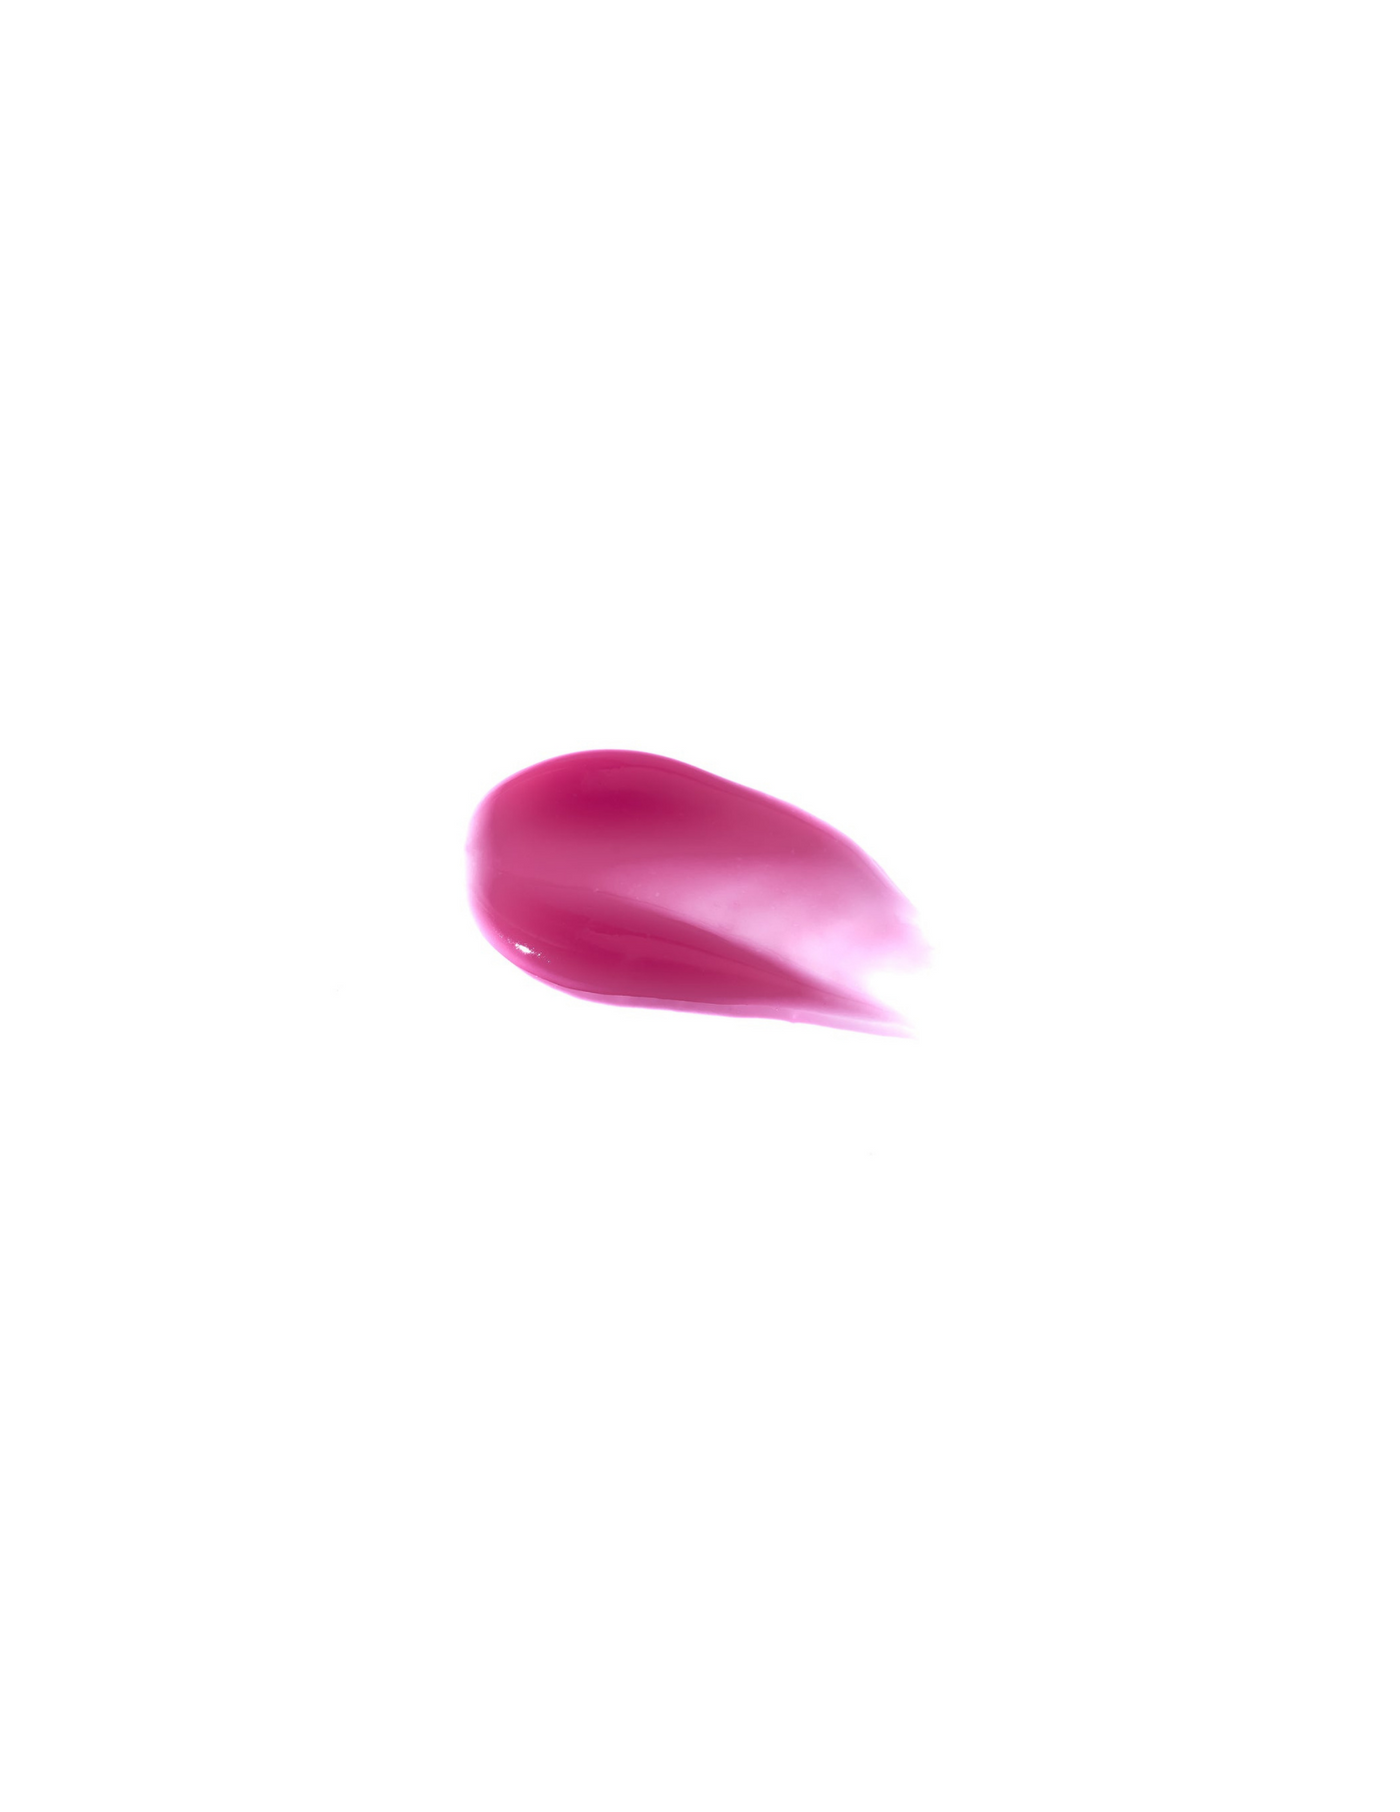 LILFOX ACID GLOW Rapid Retexture Peel texture shot beautiful pink color